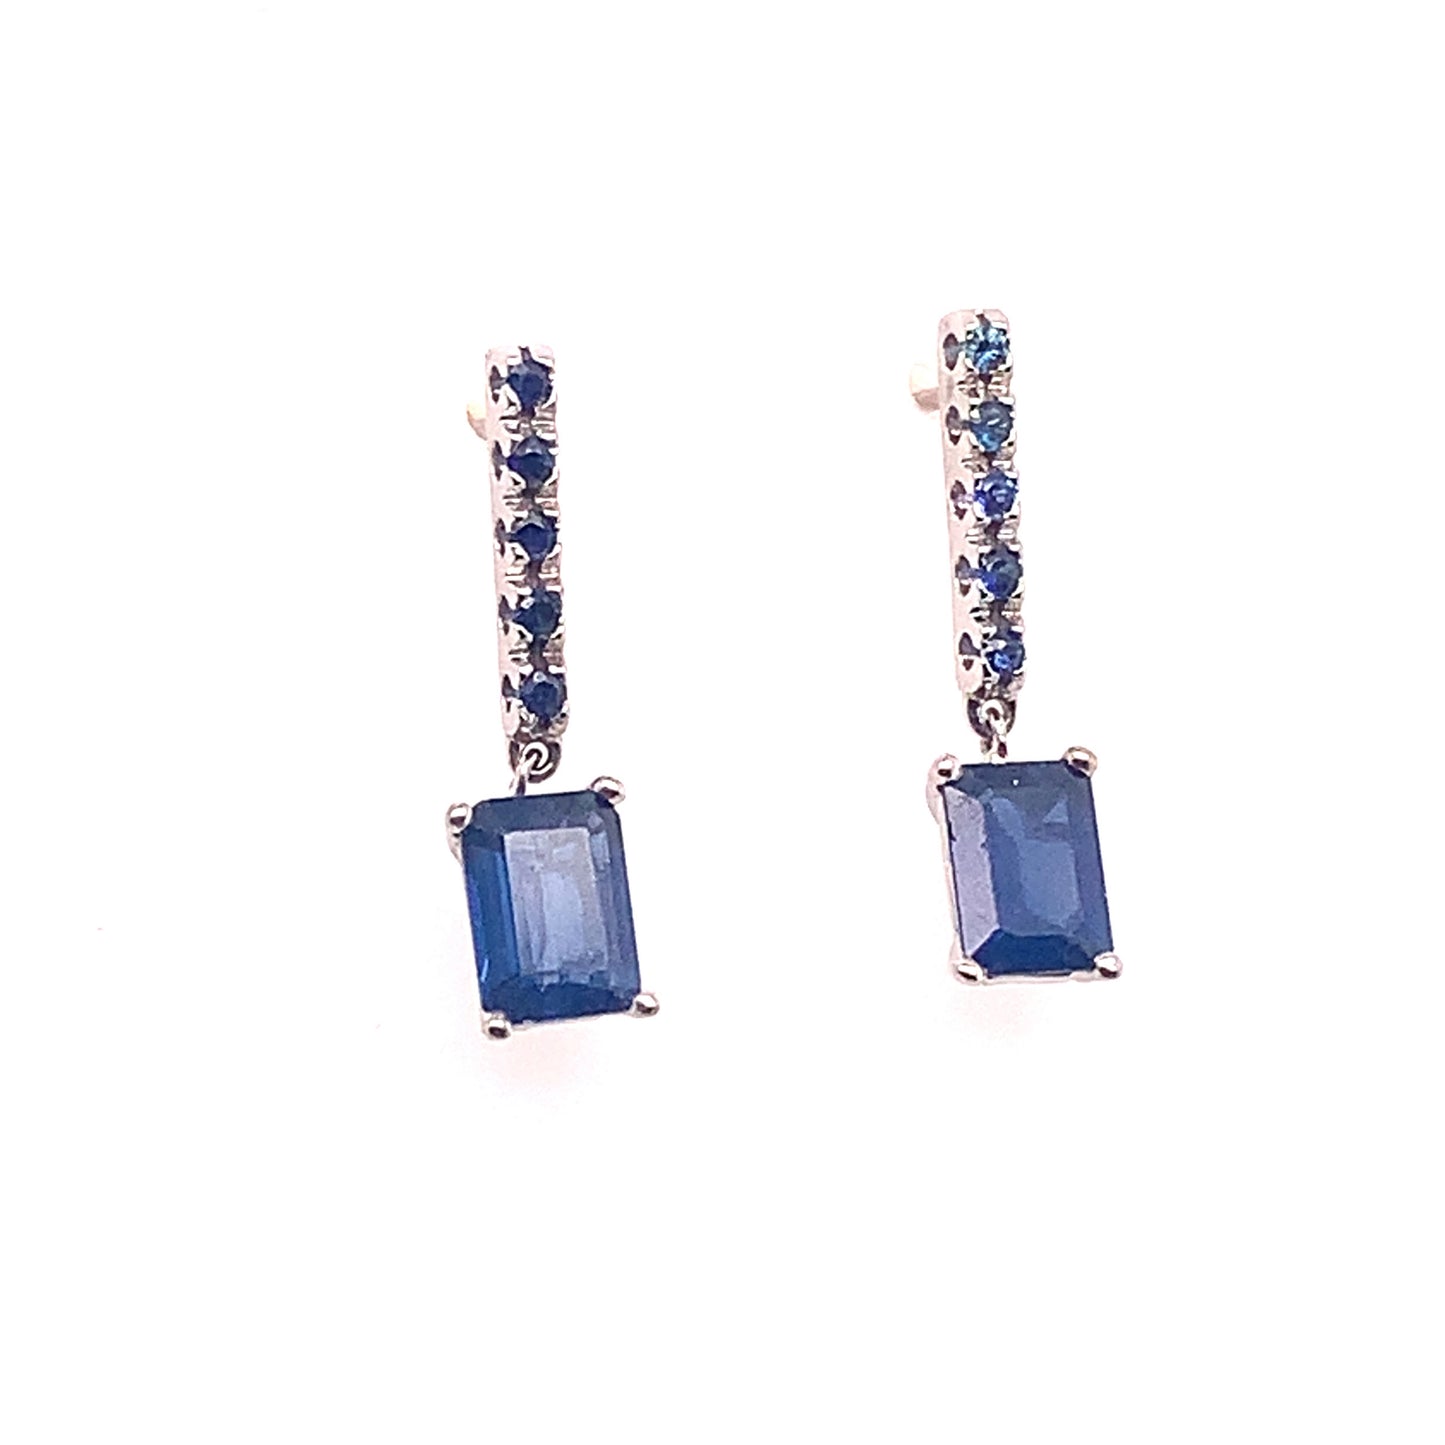 Natural Sapphire Dangle Earrings 14k Gold 2.01 TCW Certified $3,950 018682 - Certified Estate Jewelry